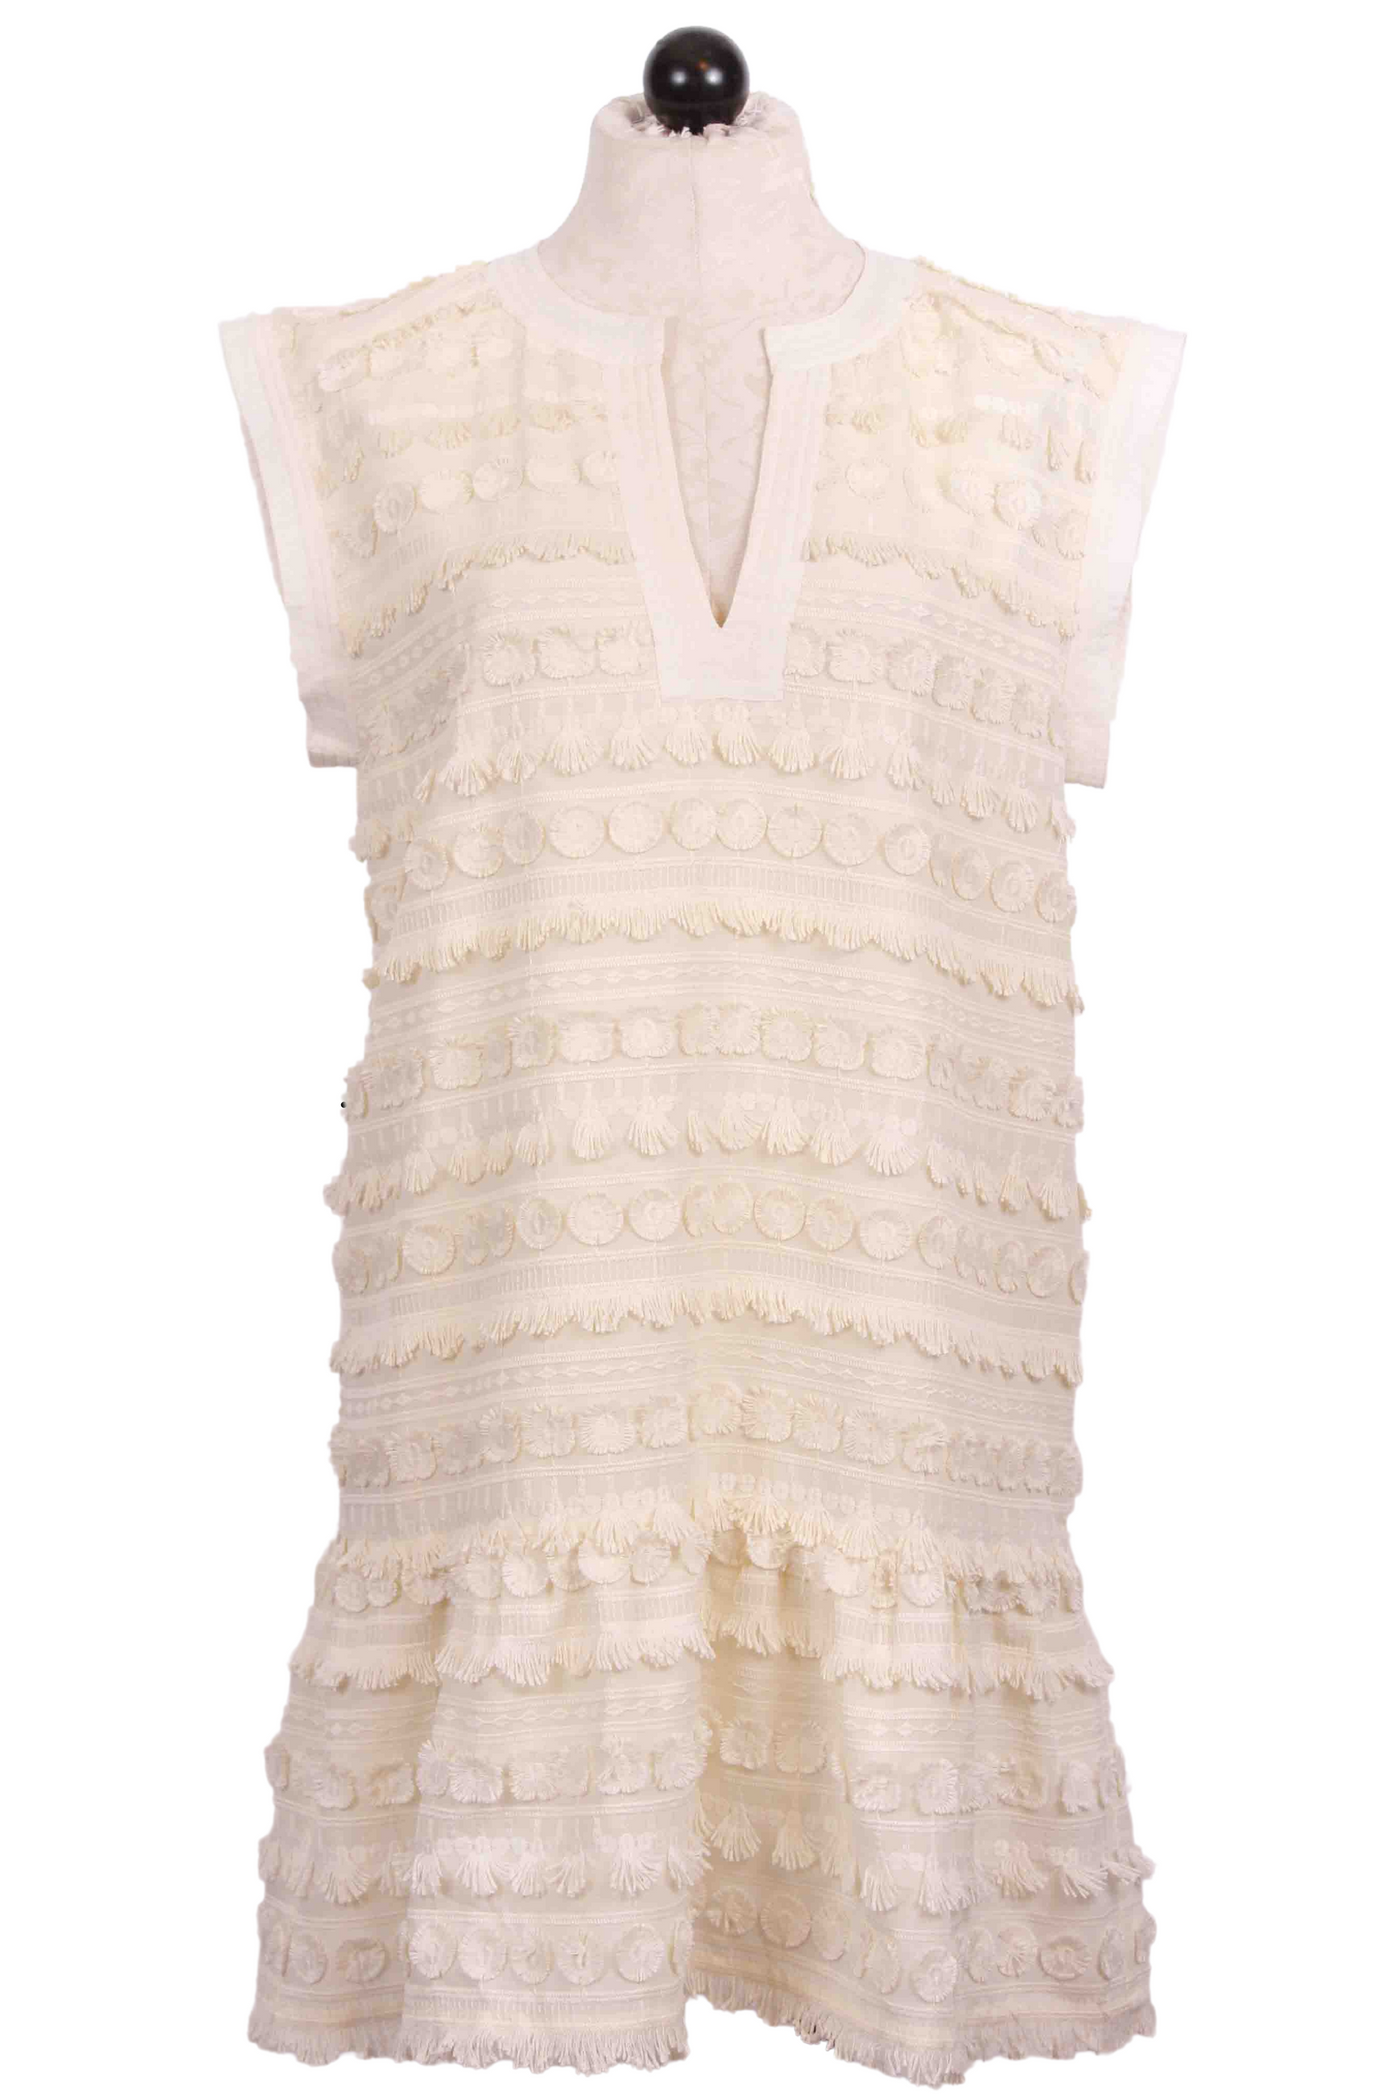 Blanc colored Herra fringe Dress by Marie Oliver